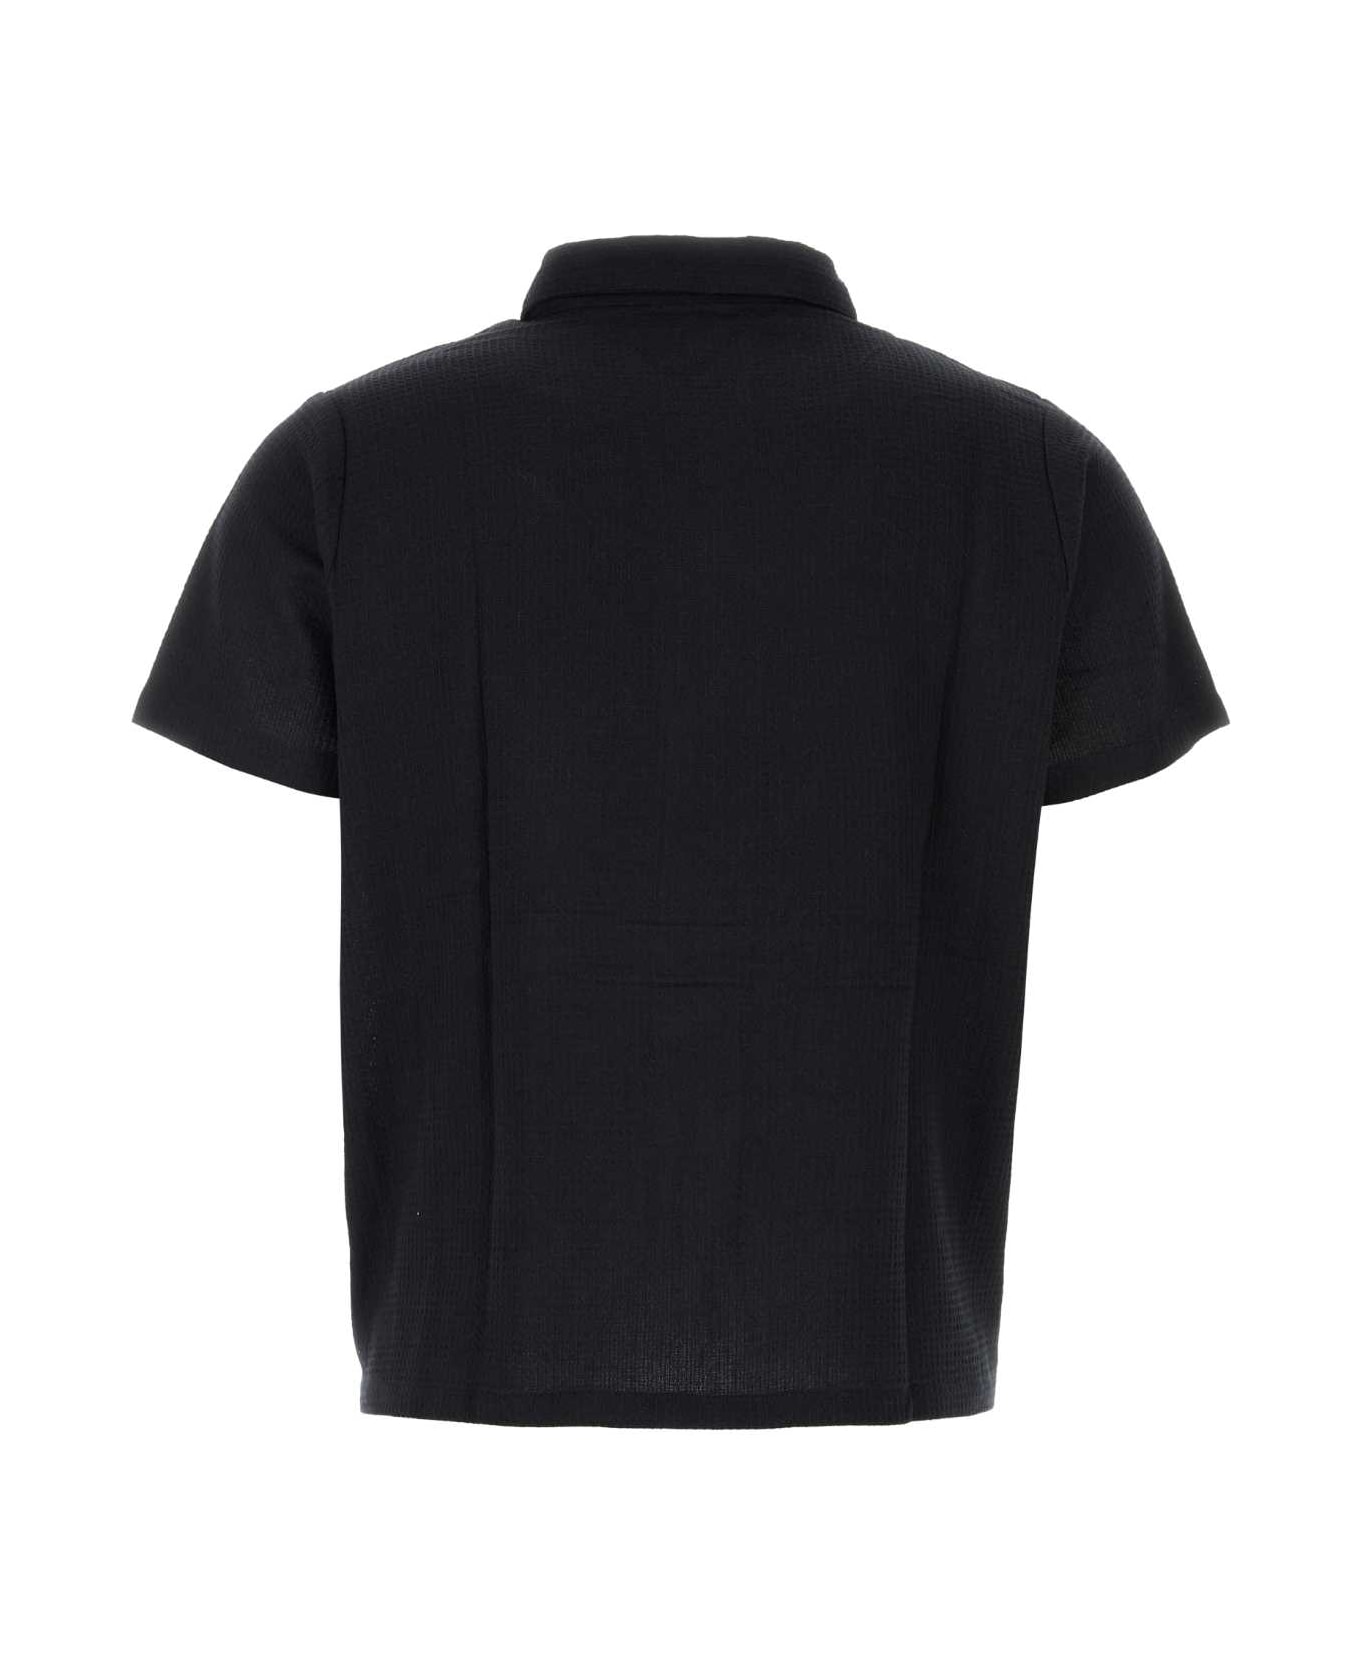 Gimaguas Black Cotton Oversize Enzo Shirt - BLACK